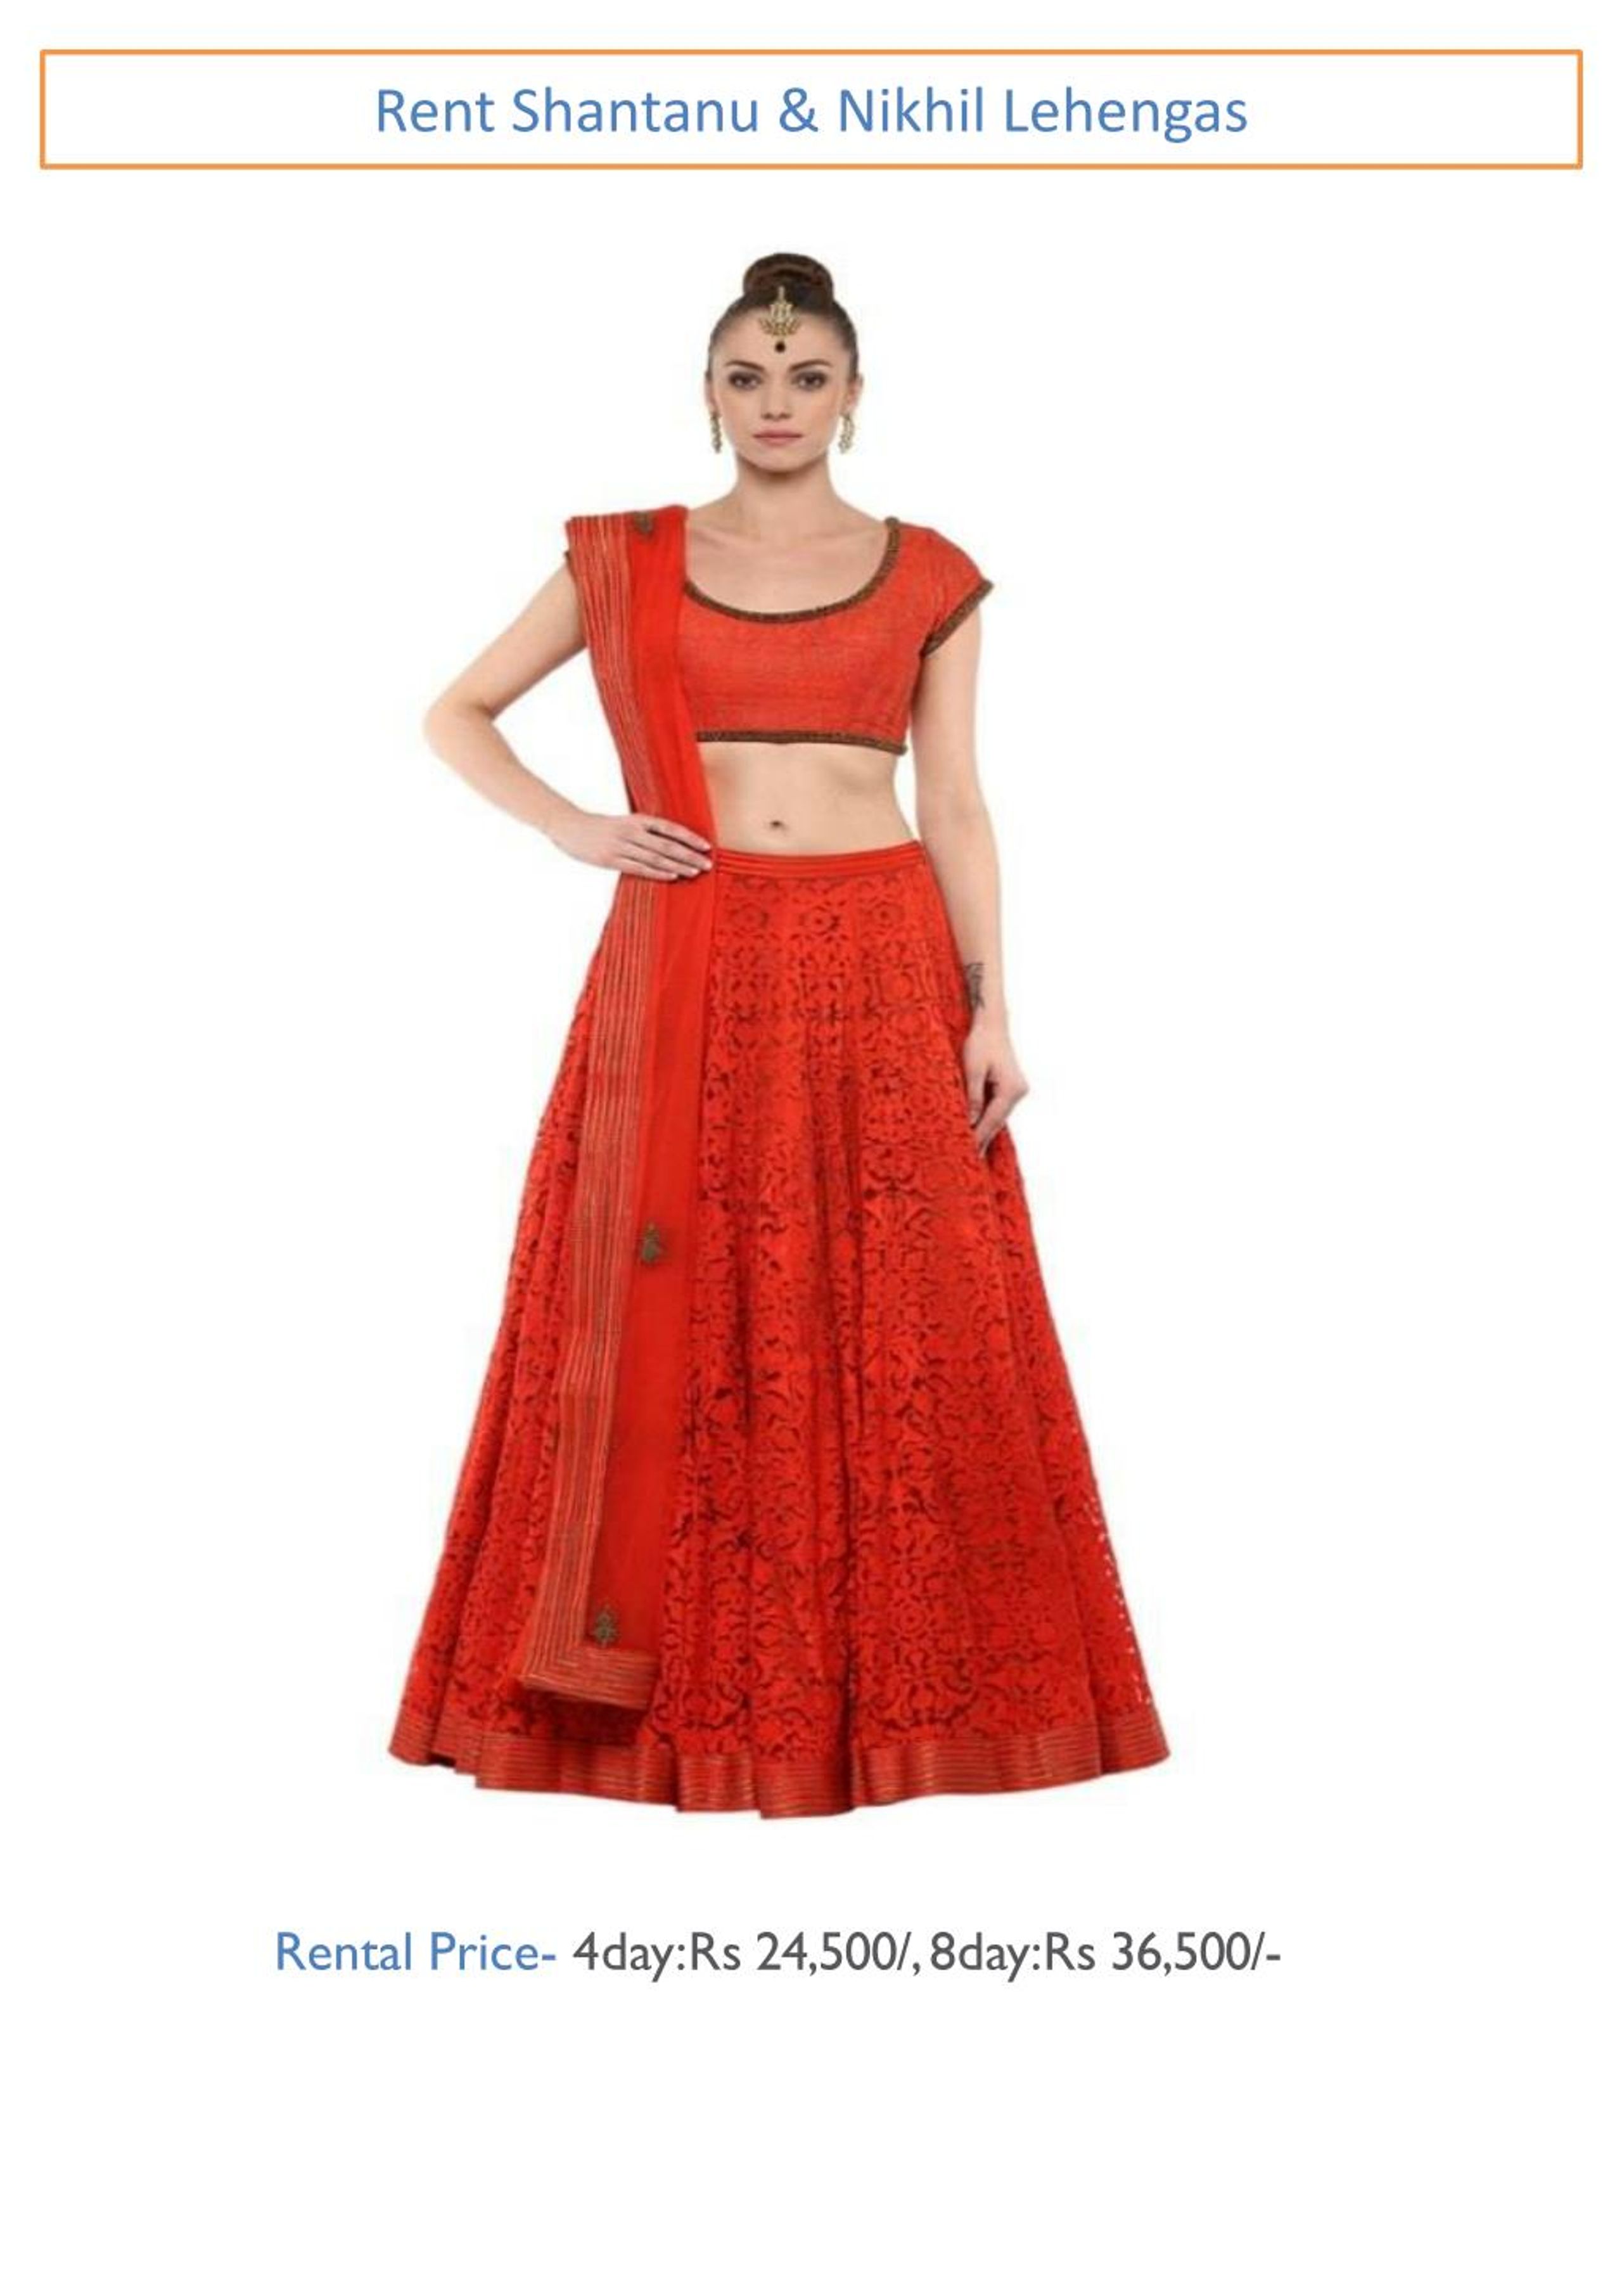 Sophie Choudry in Shantanu & Nikhil Saree Gown – Boutiquesarees.com